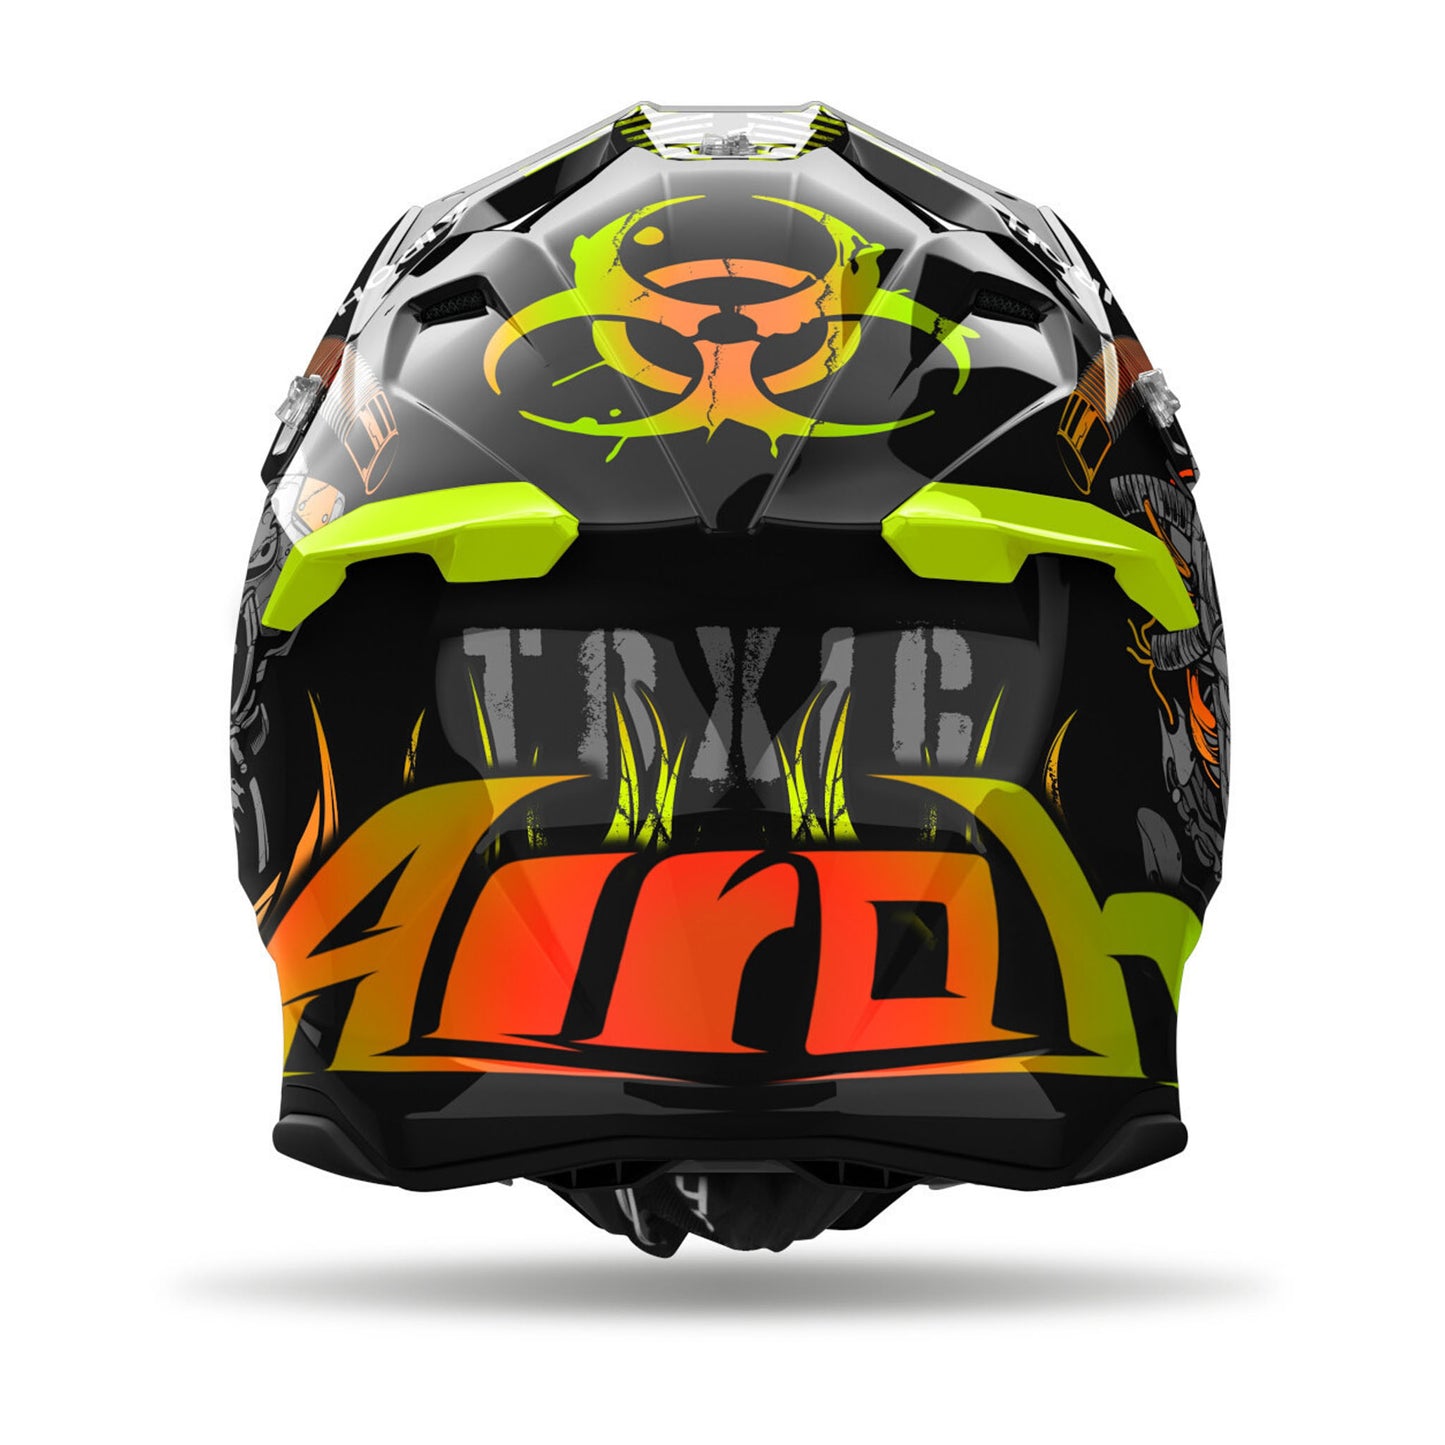 Airoh Twist 3 Toxic Helmet (Gloss)